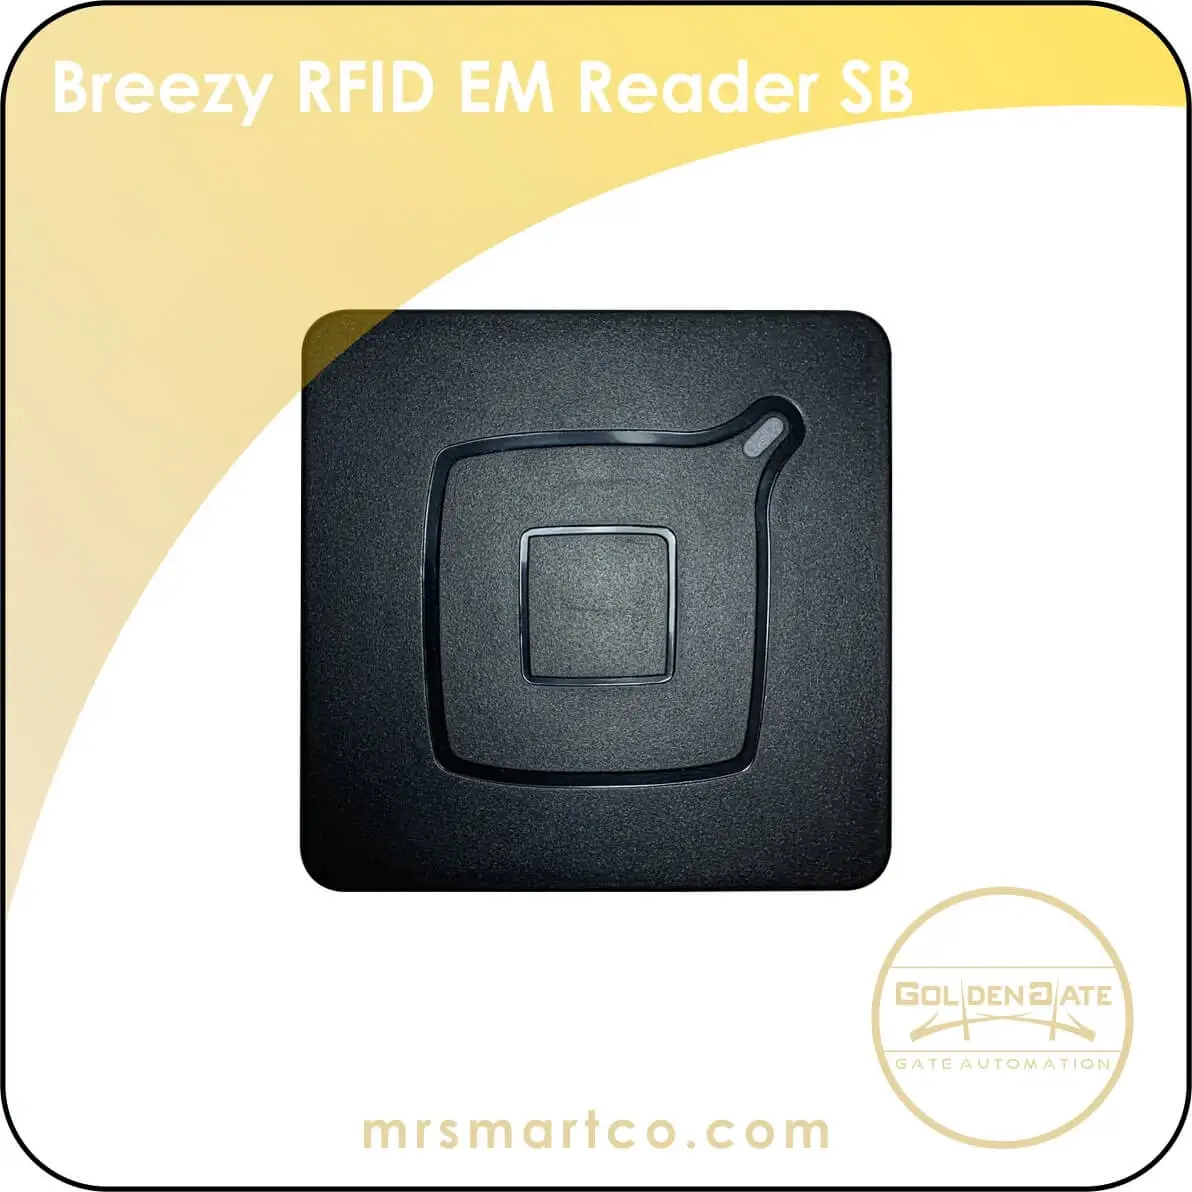 Breezy RFID EM Reader SB